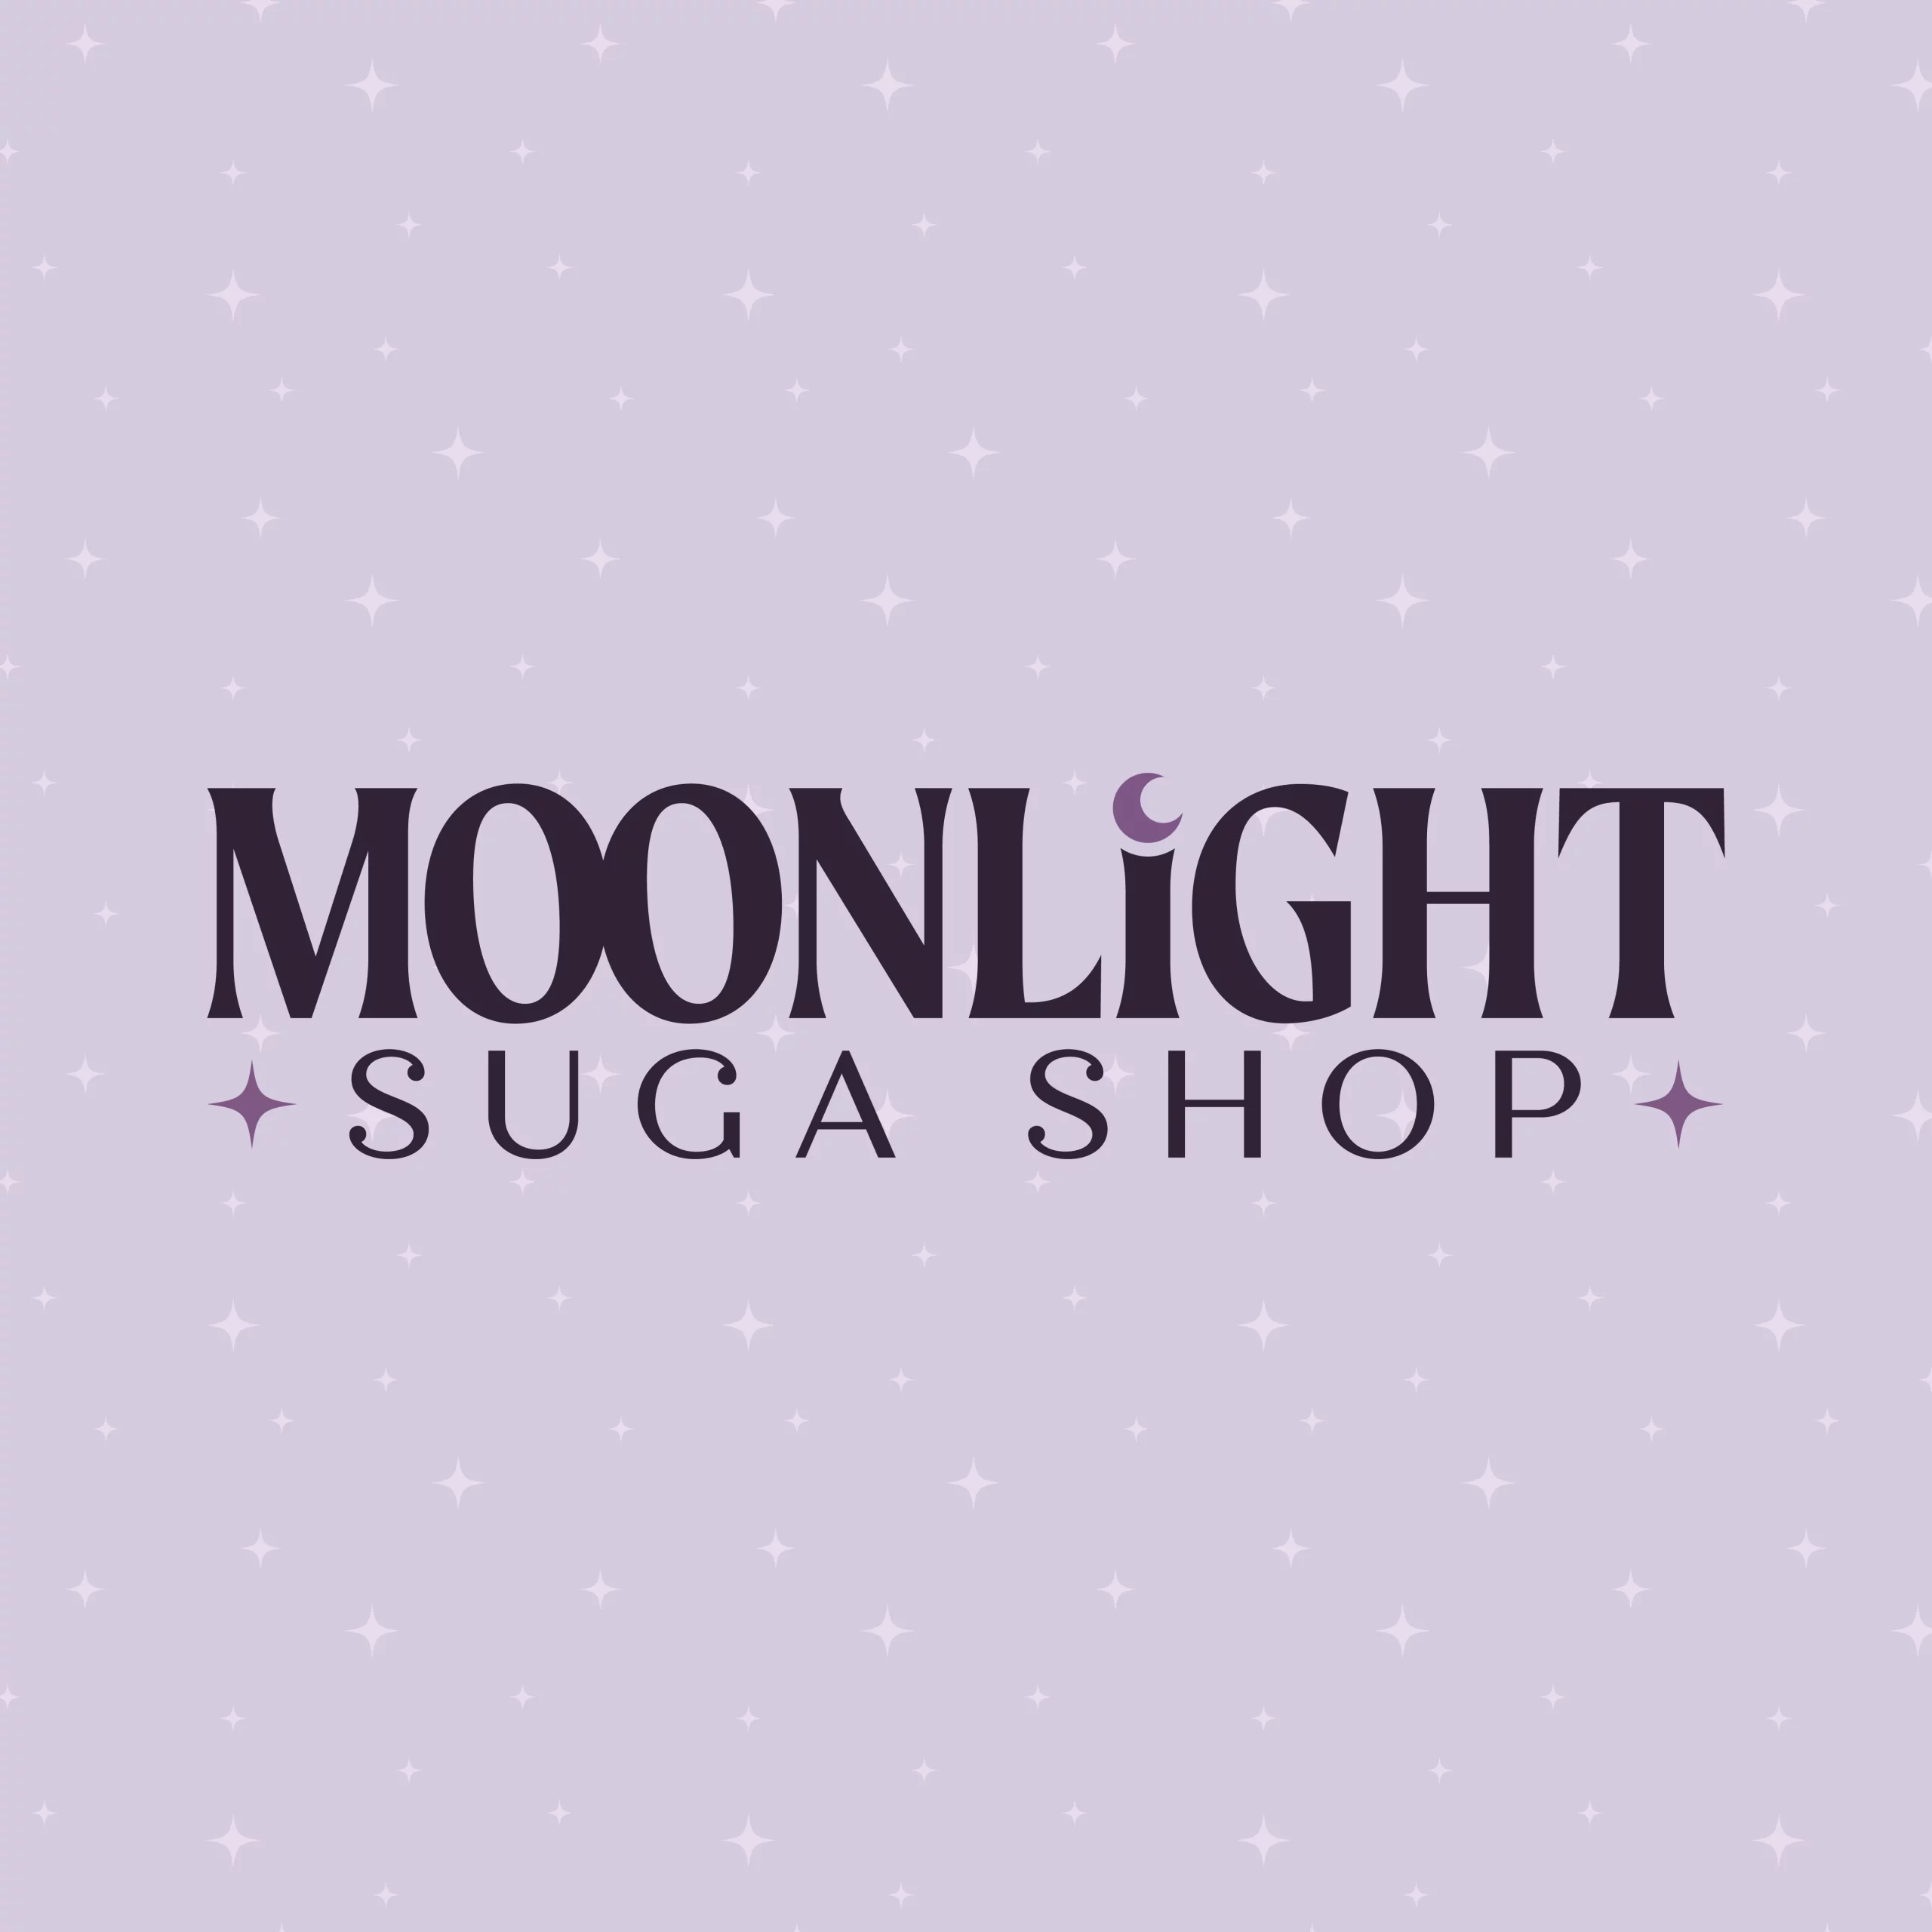 moonlight suga shop logo kate chambers creative